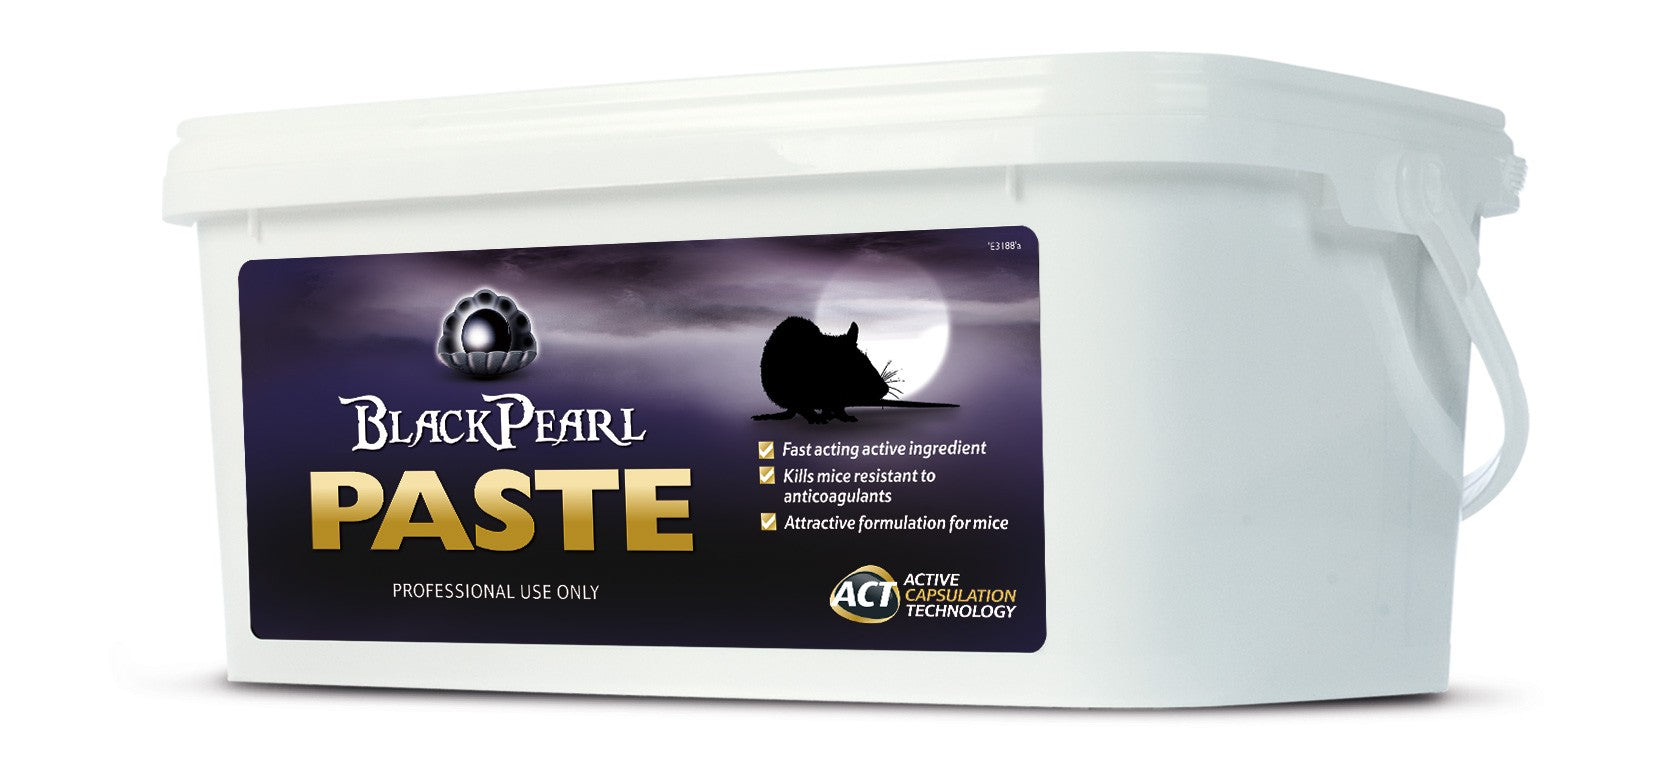 Black Pearl Mouse Killer - Paste Bait  - 1kg - Professional Use Only